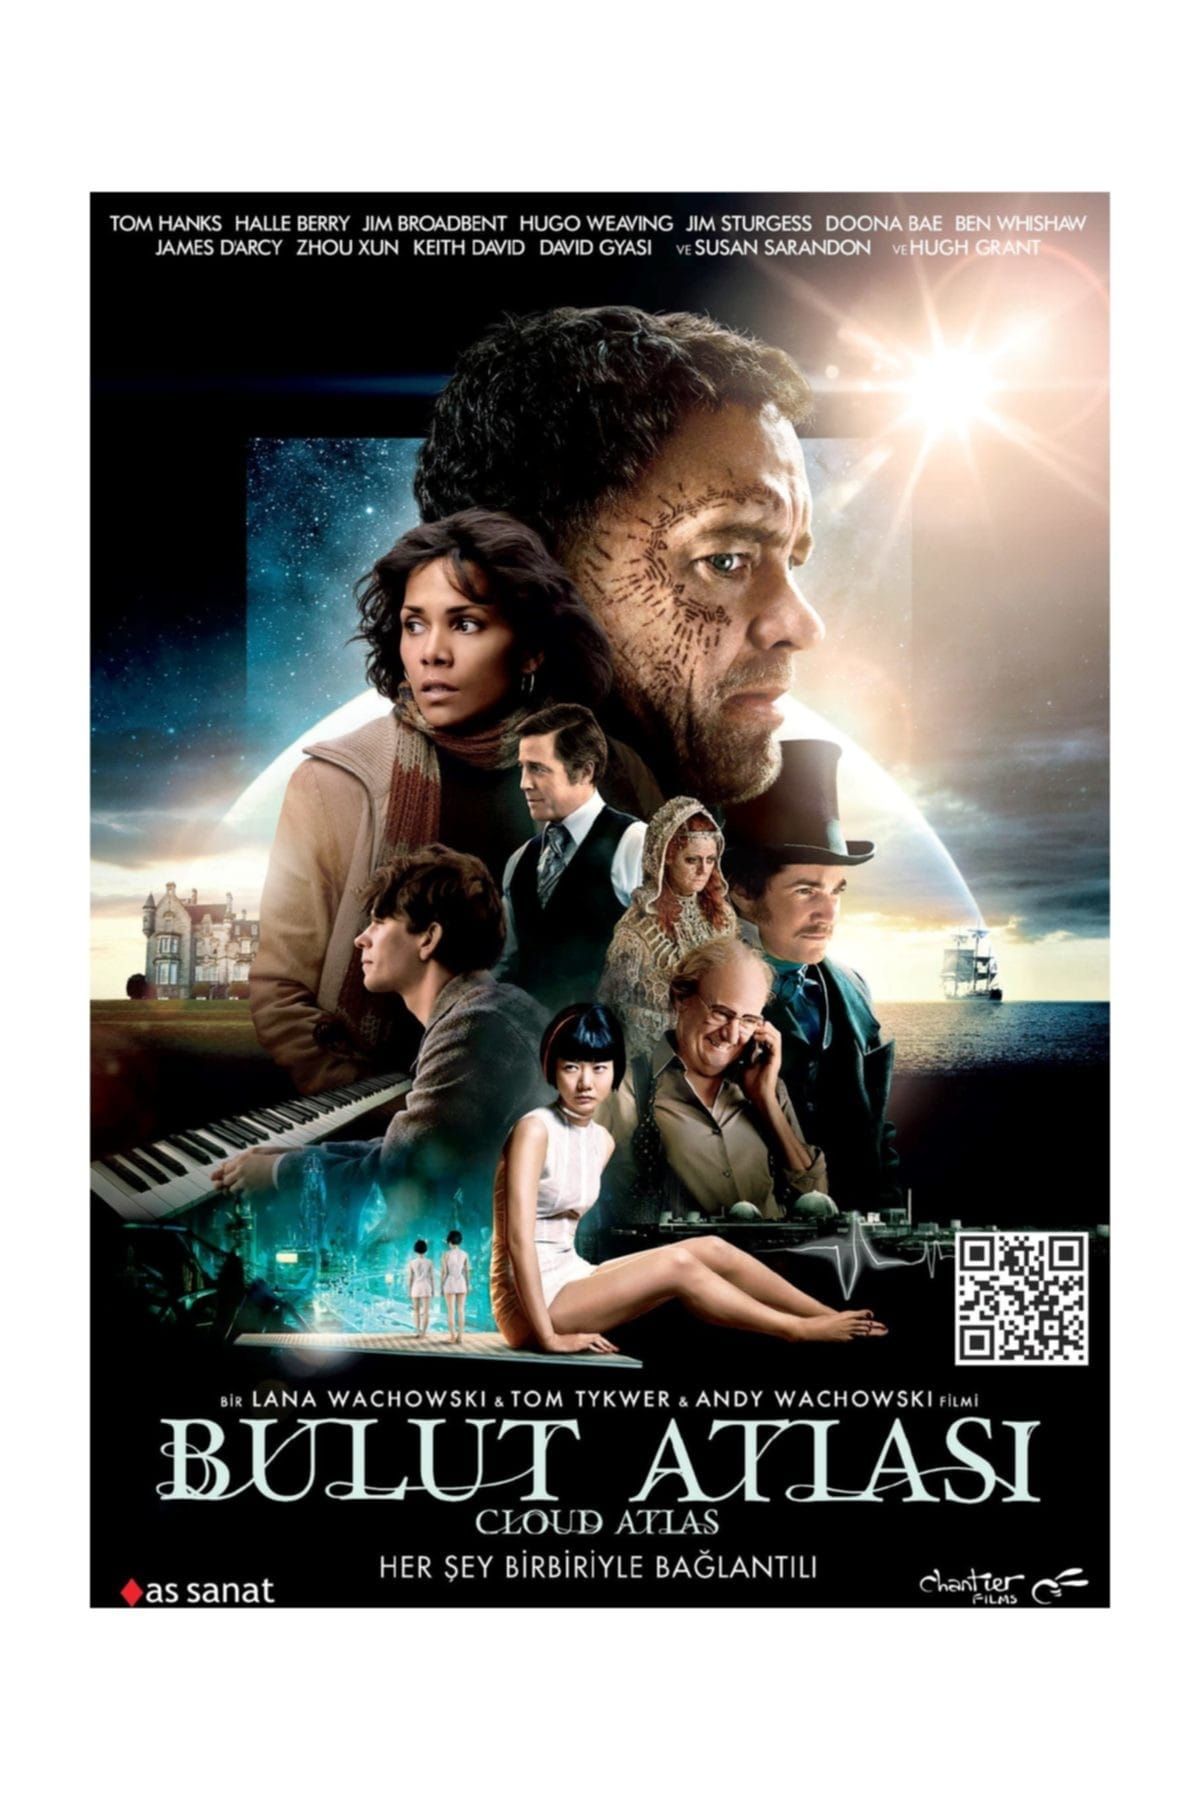 Pal DVD-BULUT ATLASI / Cloud Atlas